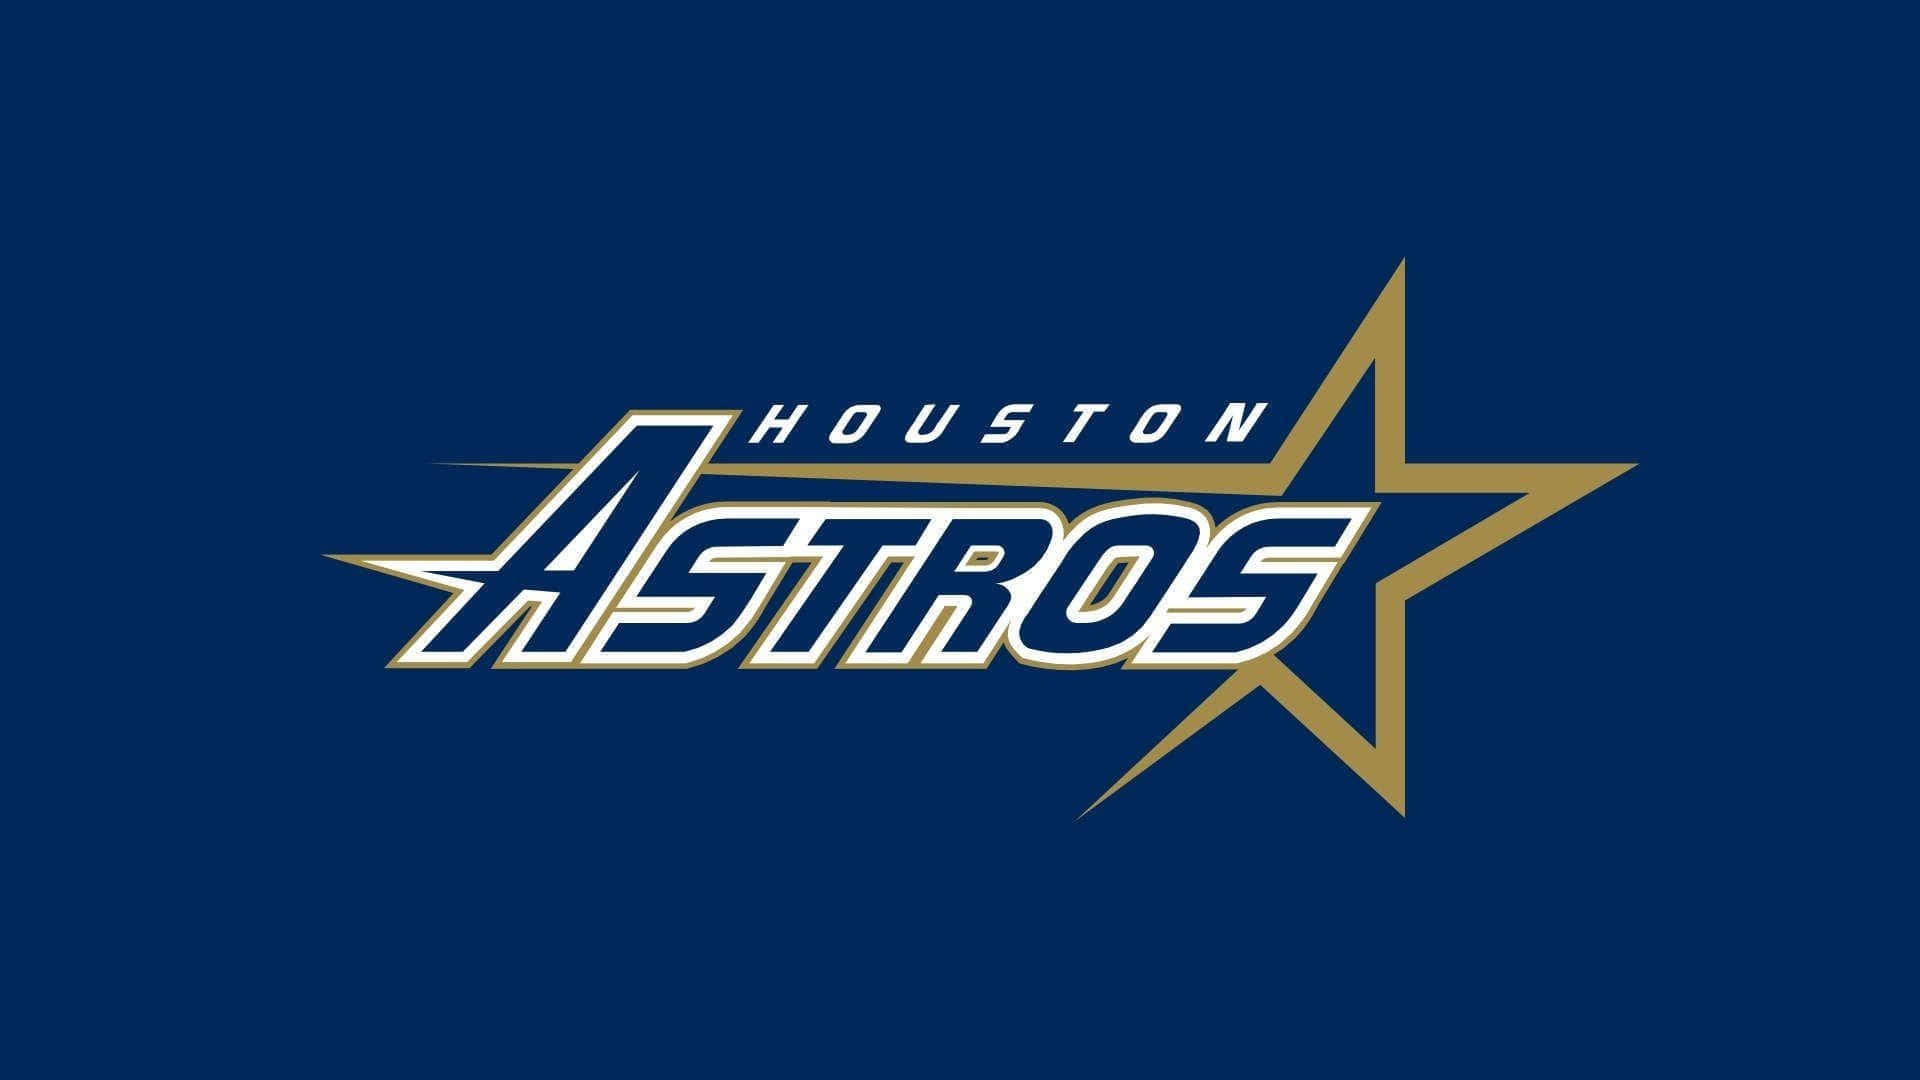 Houston Astros baseball team in action